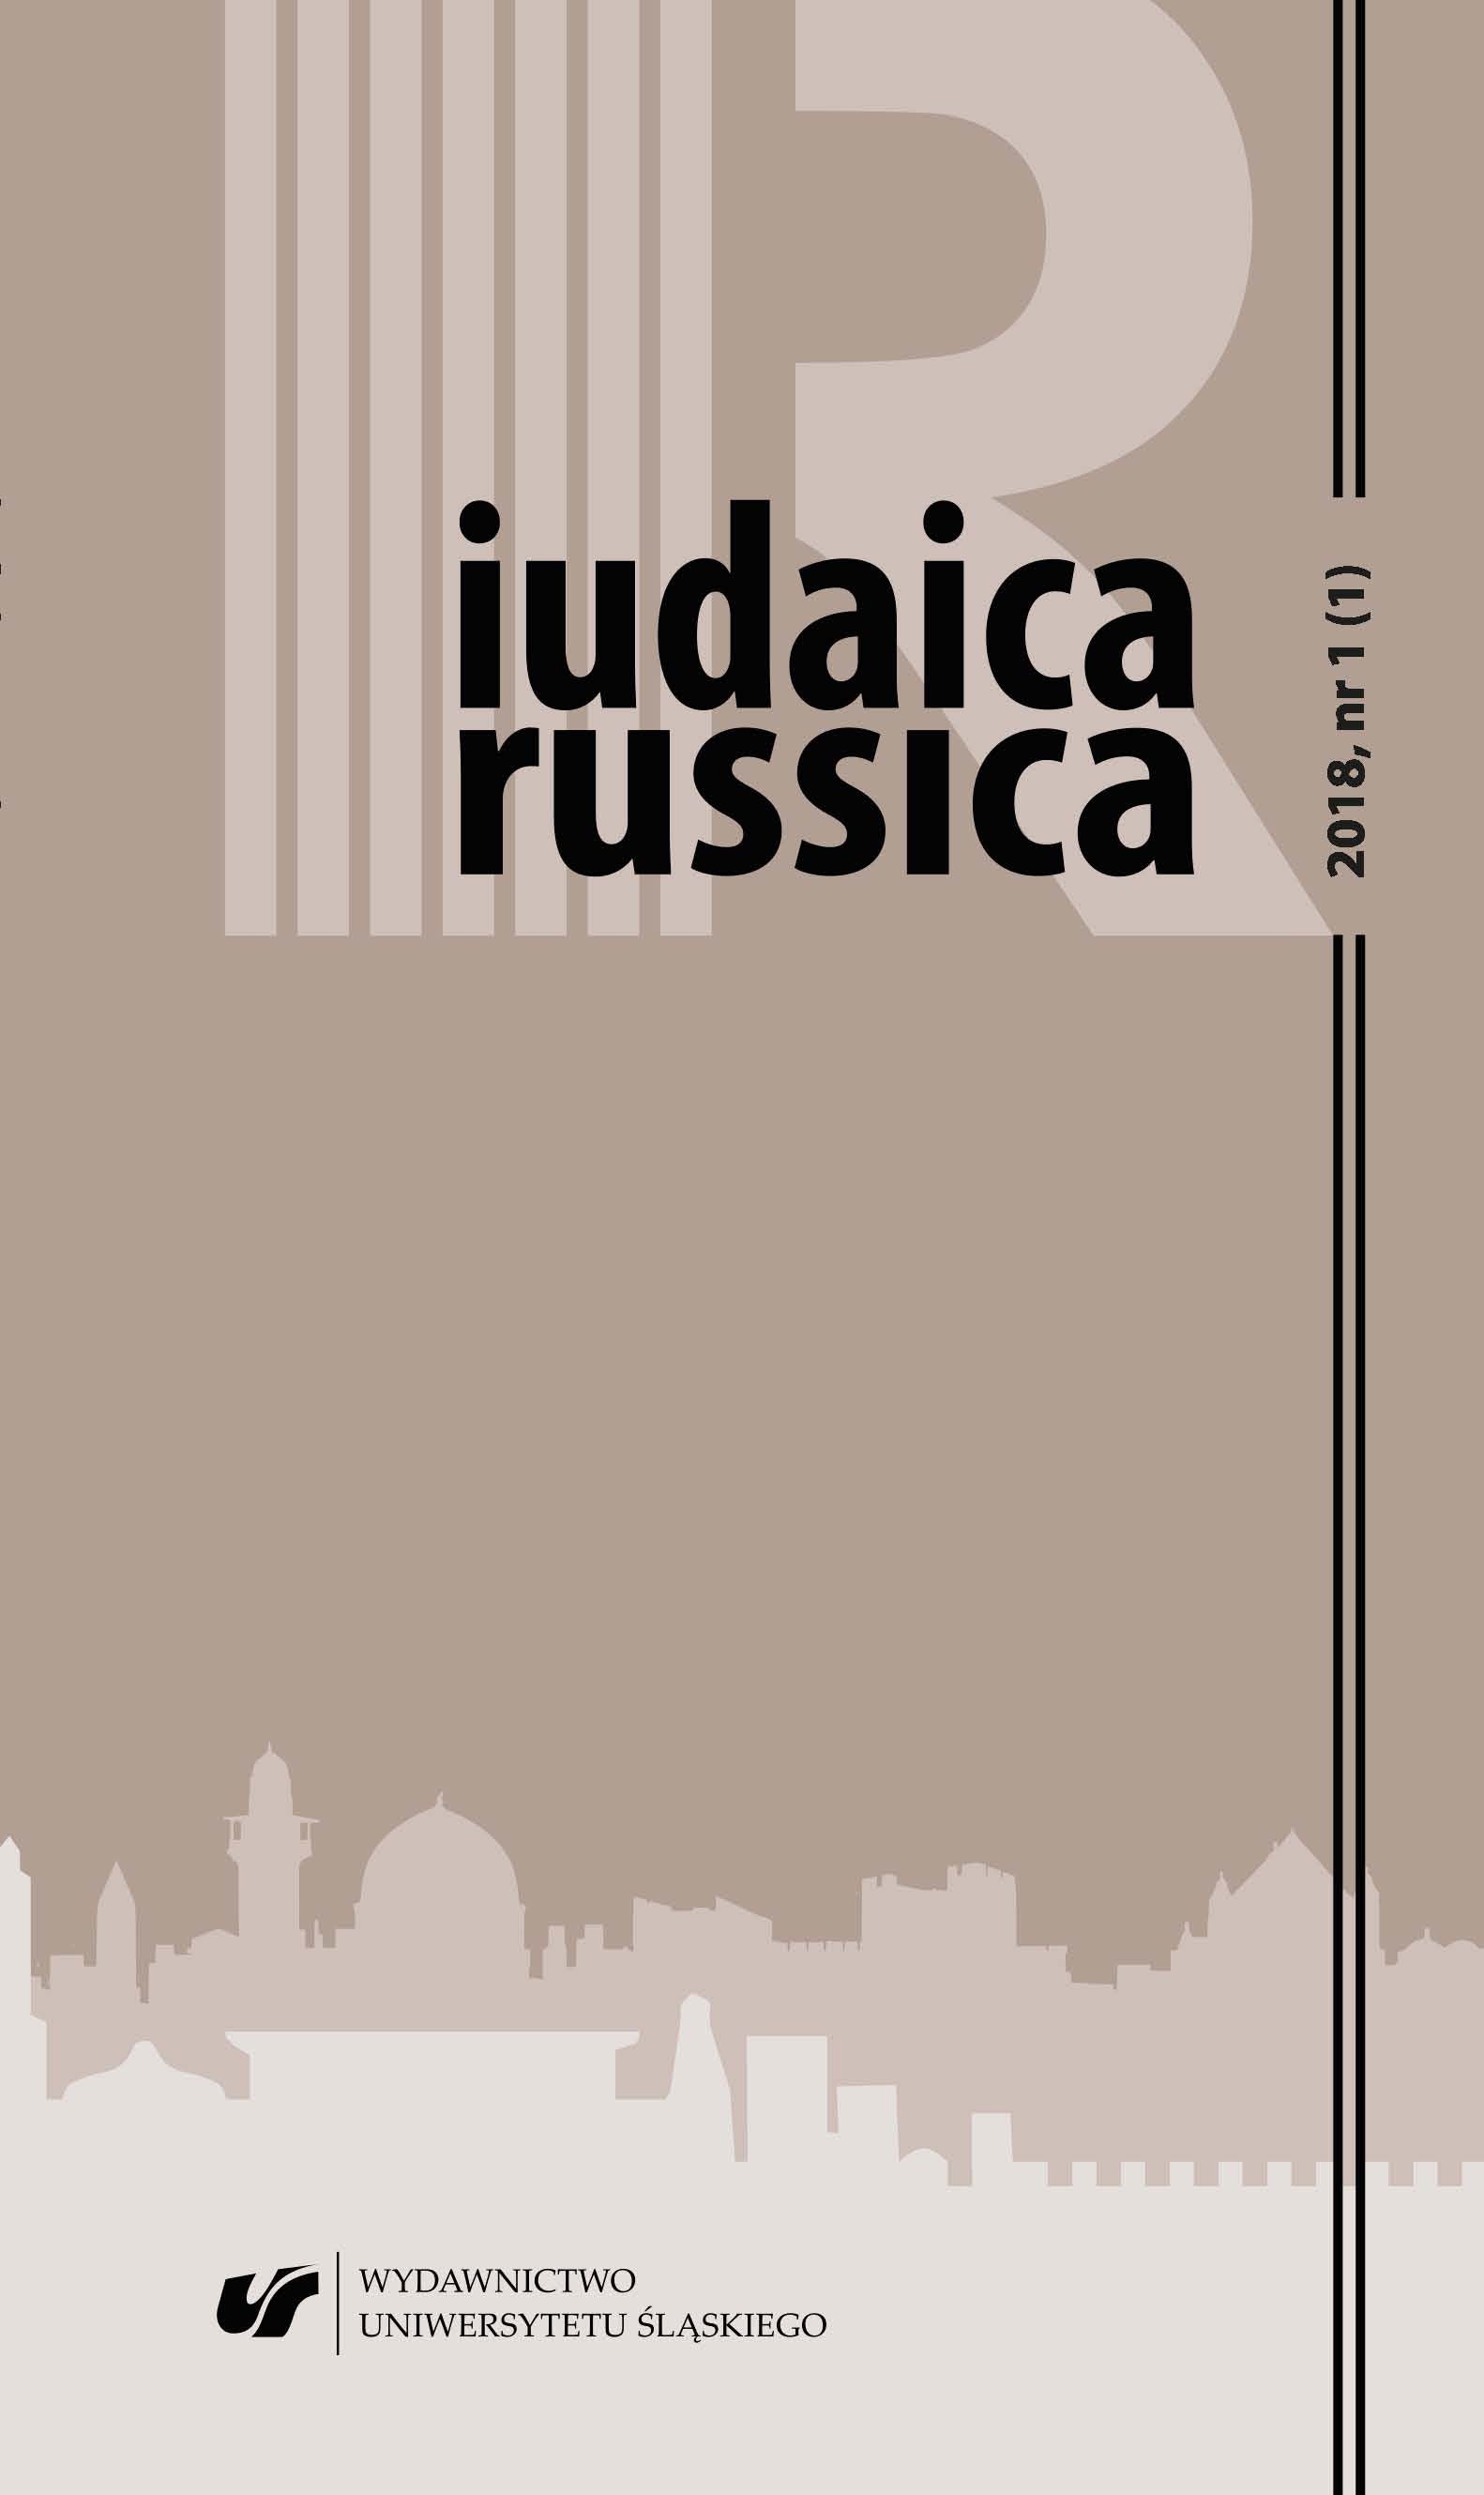 Reviews: Ścieżki poznania (Д. Соболев, „Тропы”, Издательские решения, bmw, 2017) Cover Image